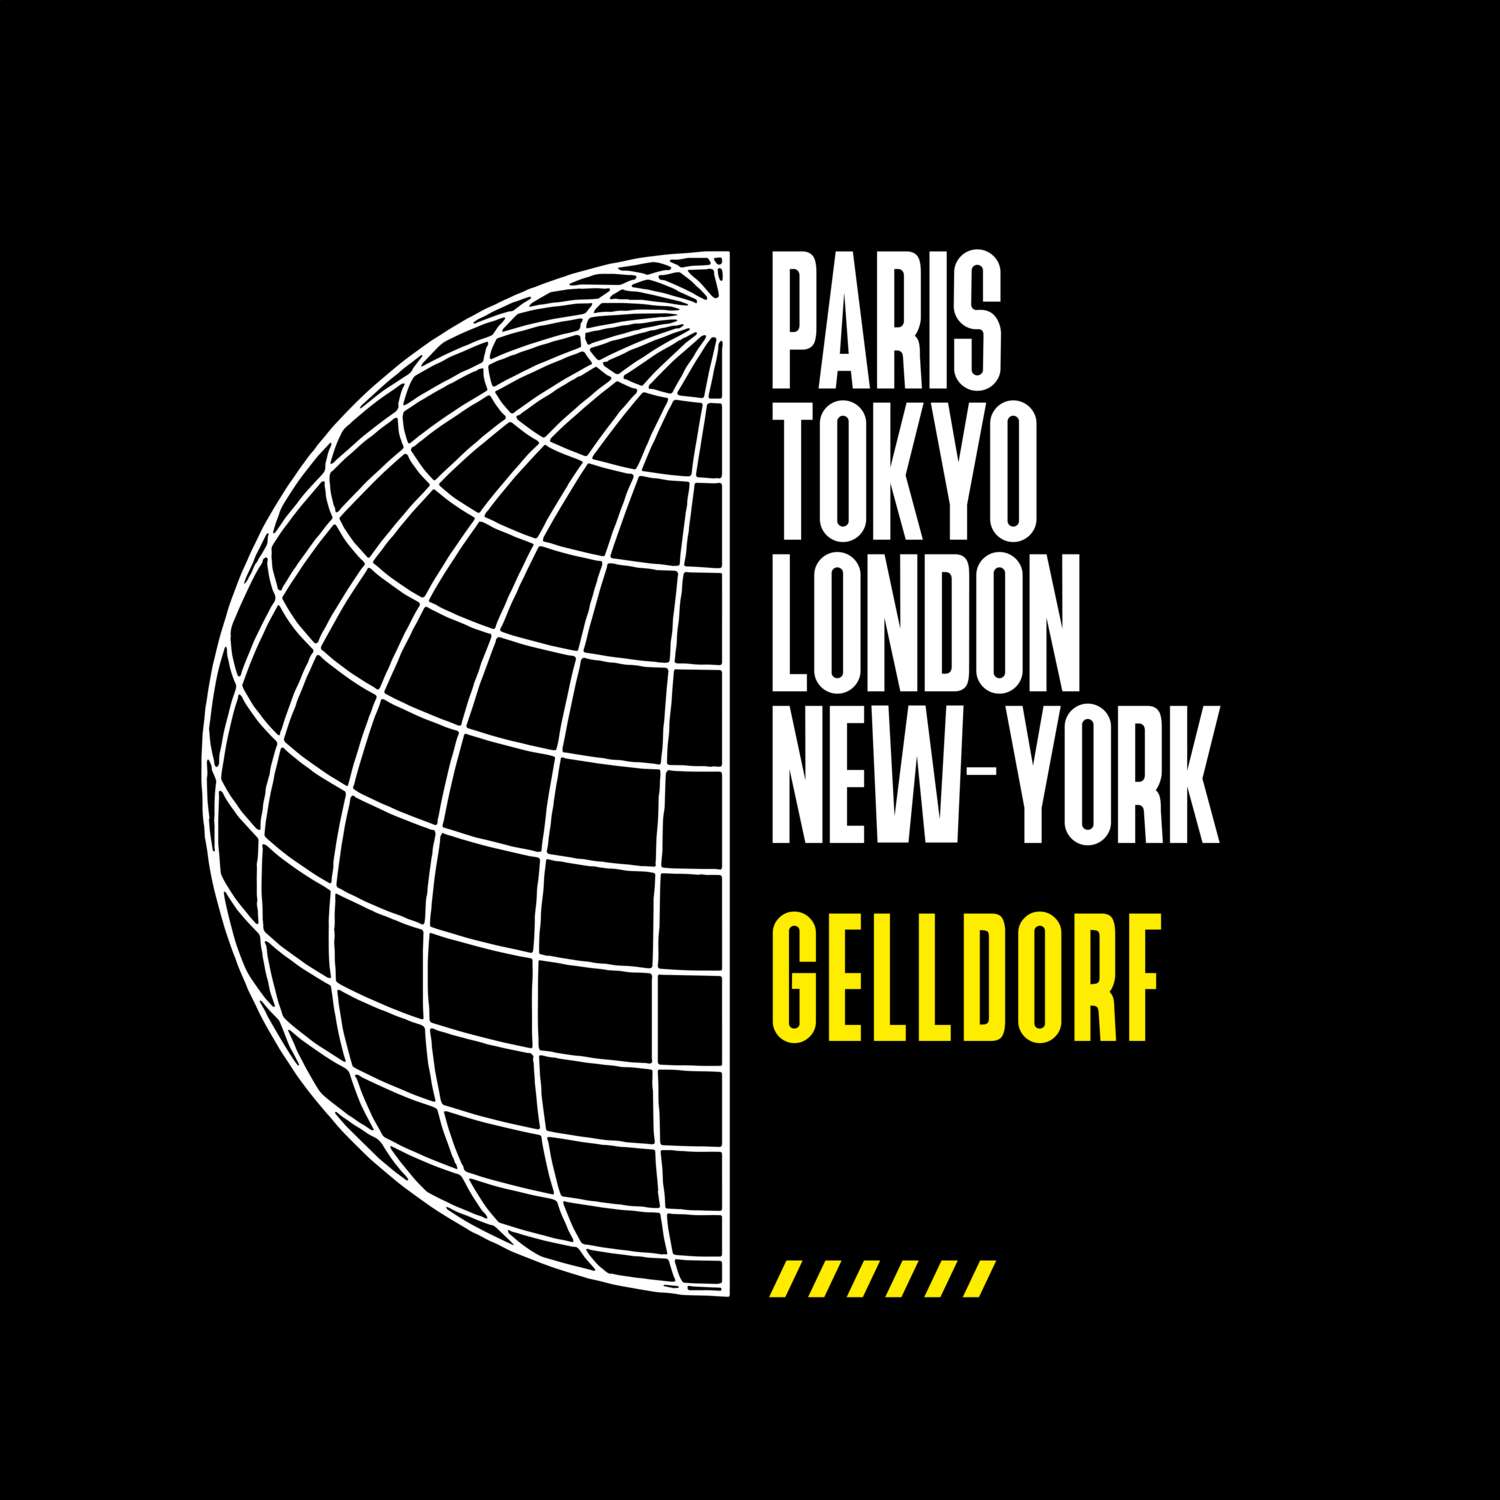 Gelldorf T-Shirt »Paris Tokyo London«